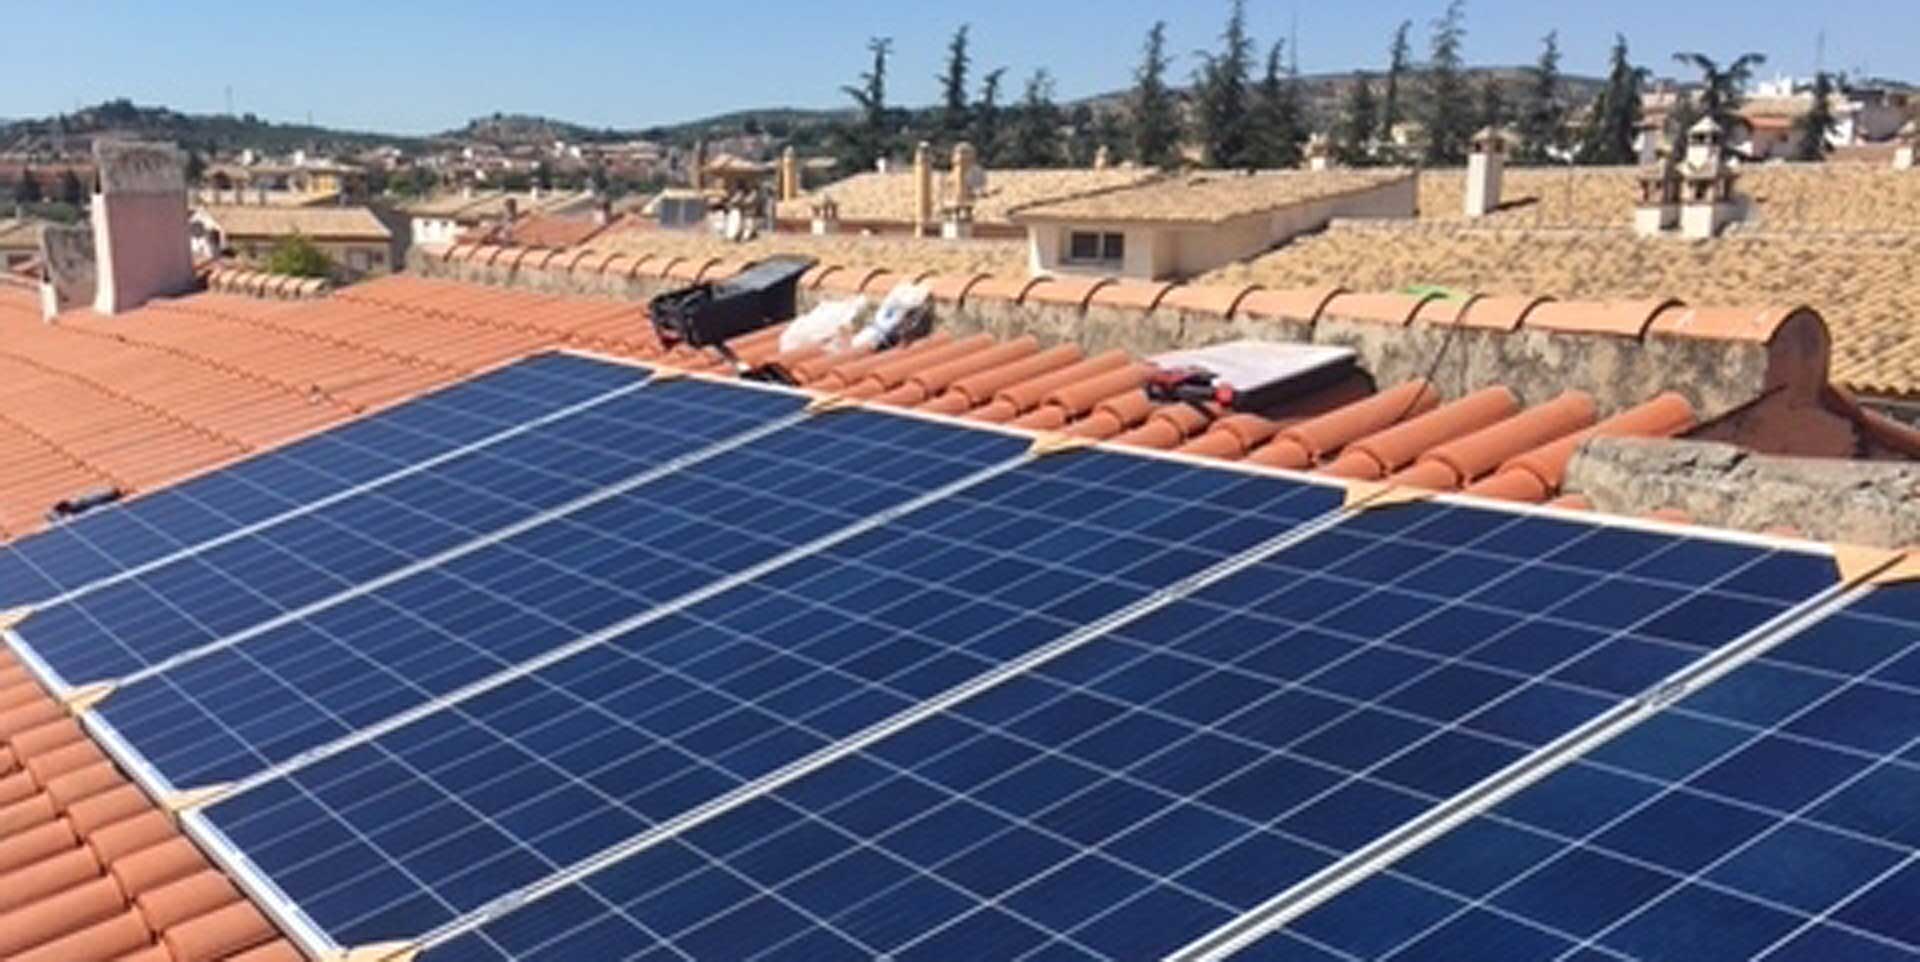 Placas solares Malaga colegio